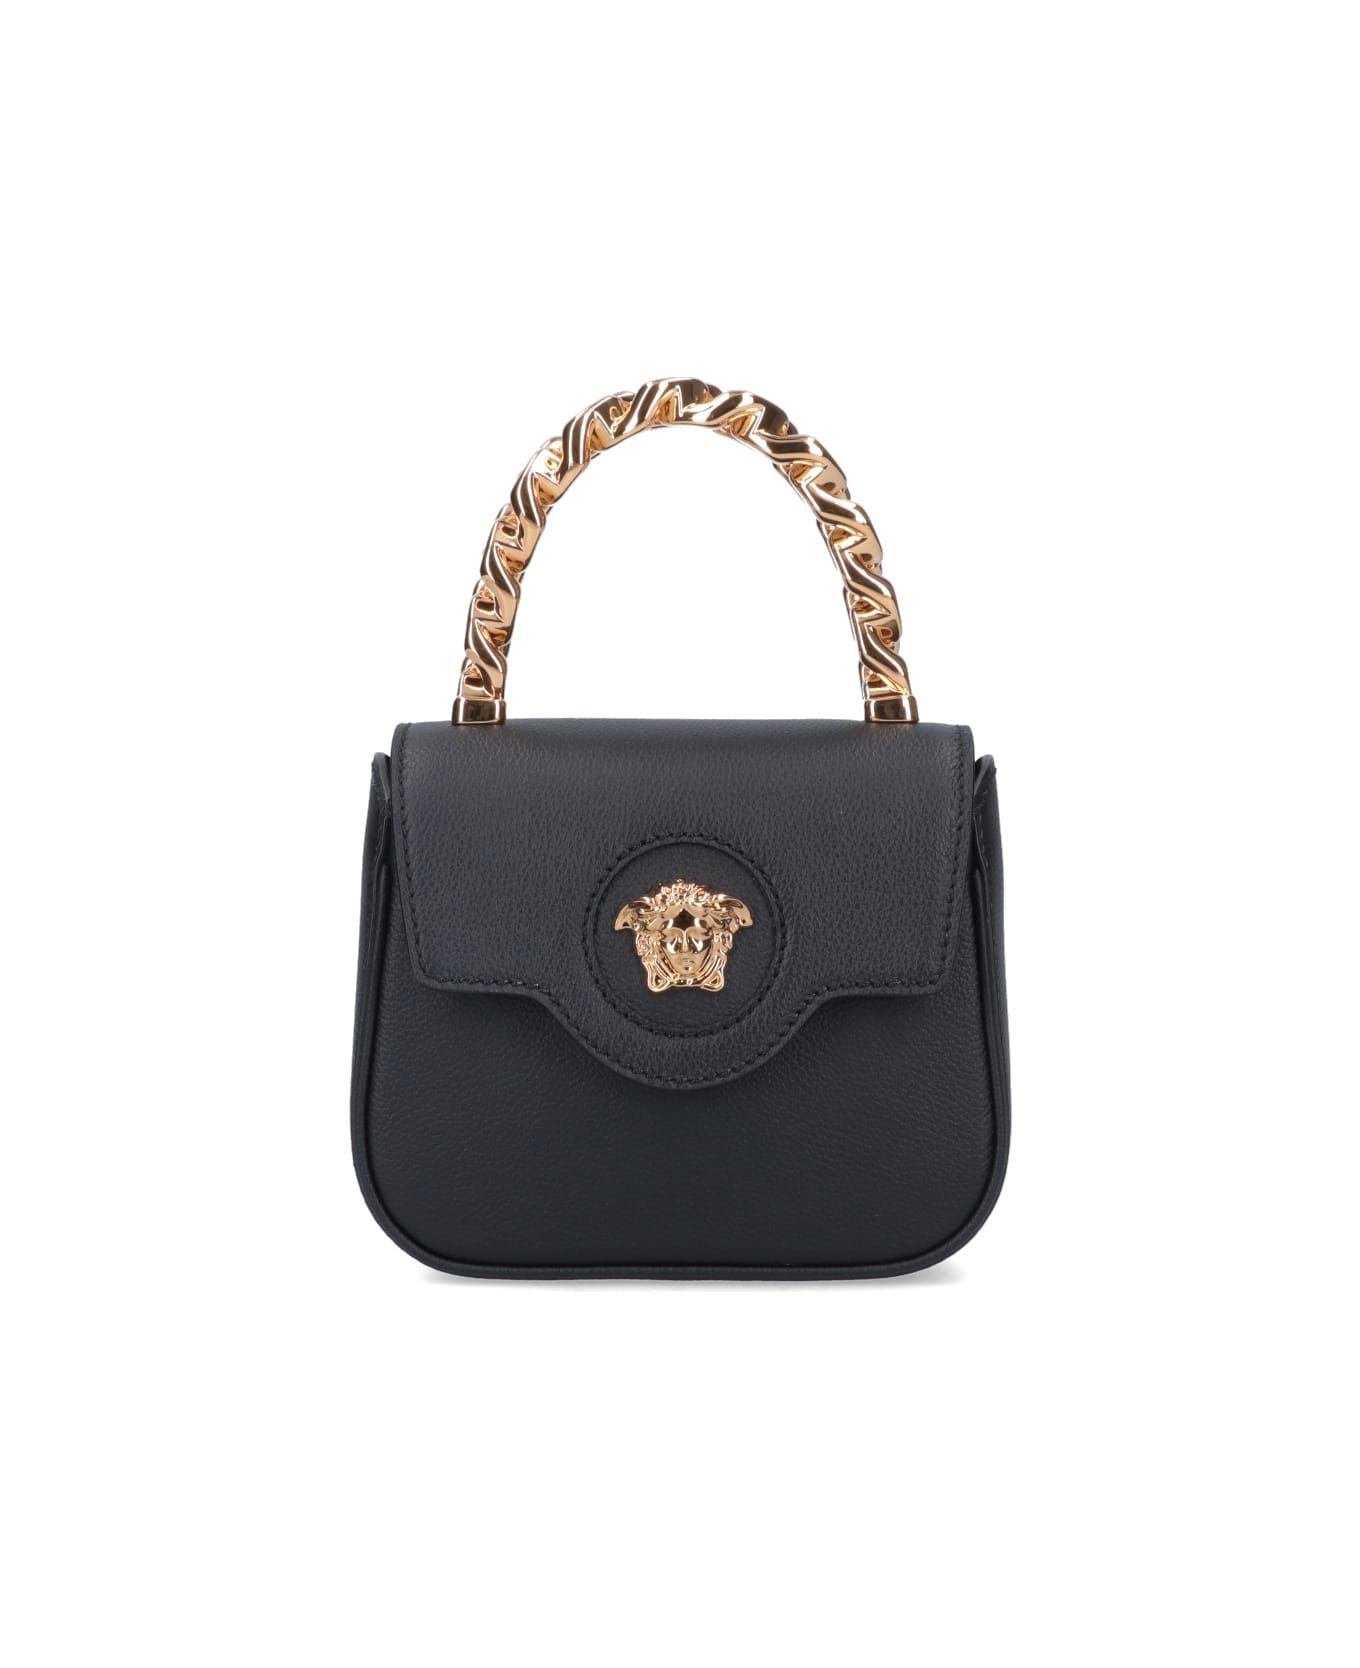 Versace 'the Medusa' Mini Bag - Black   トートバッグ